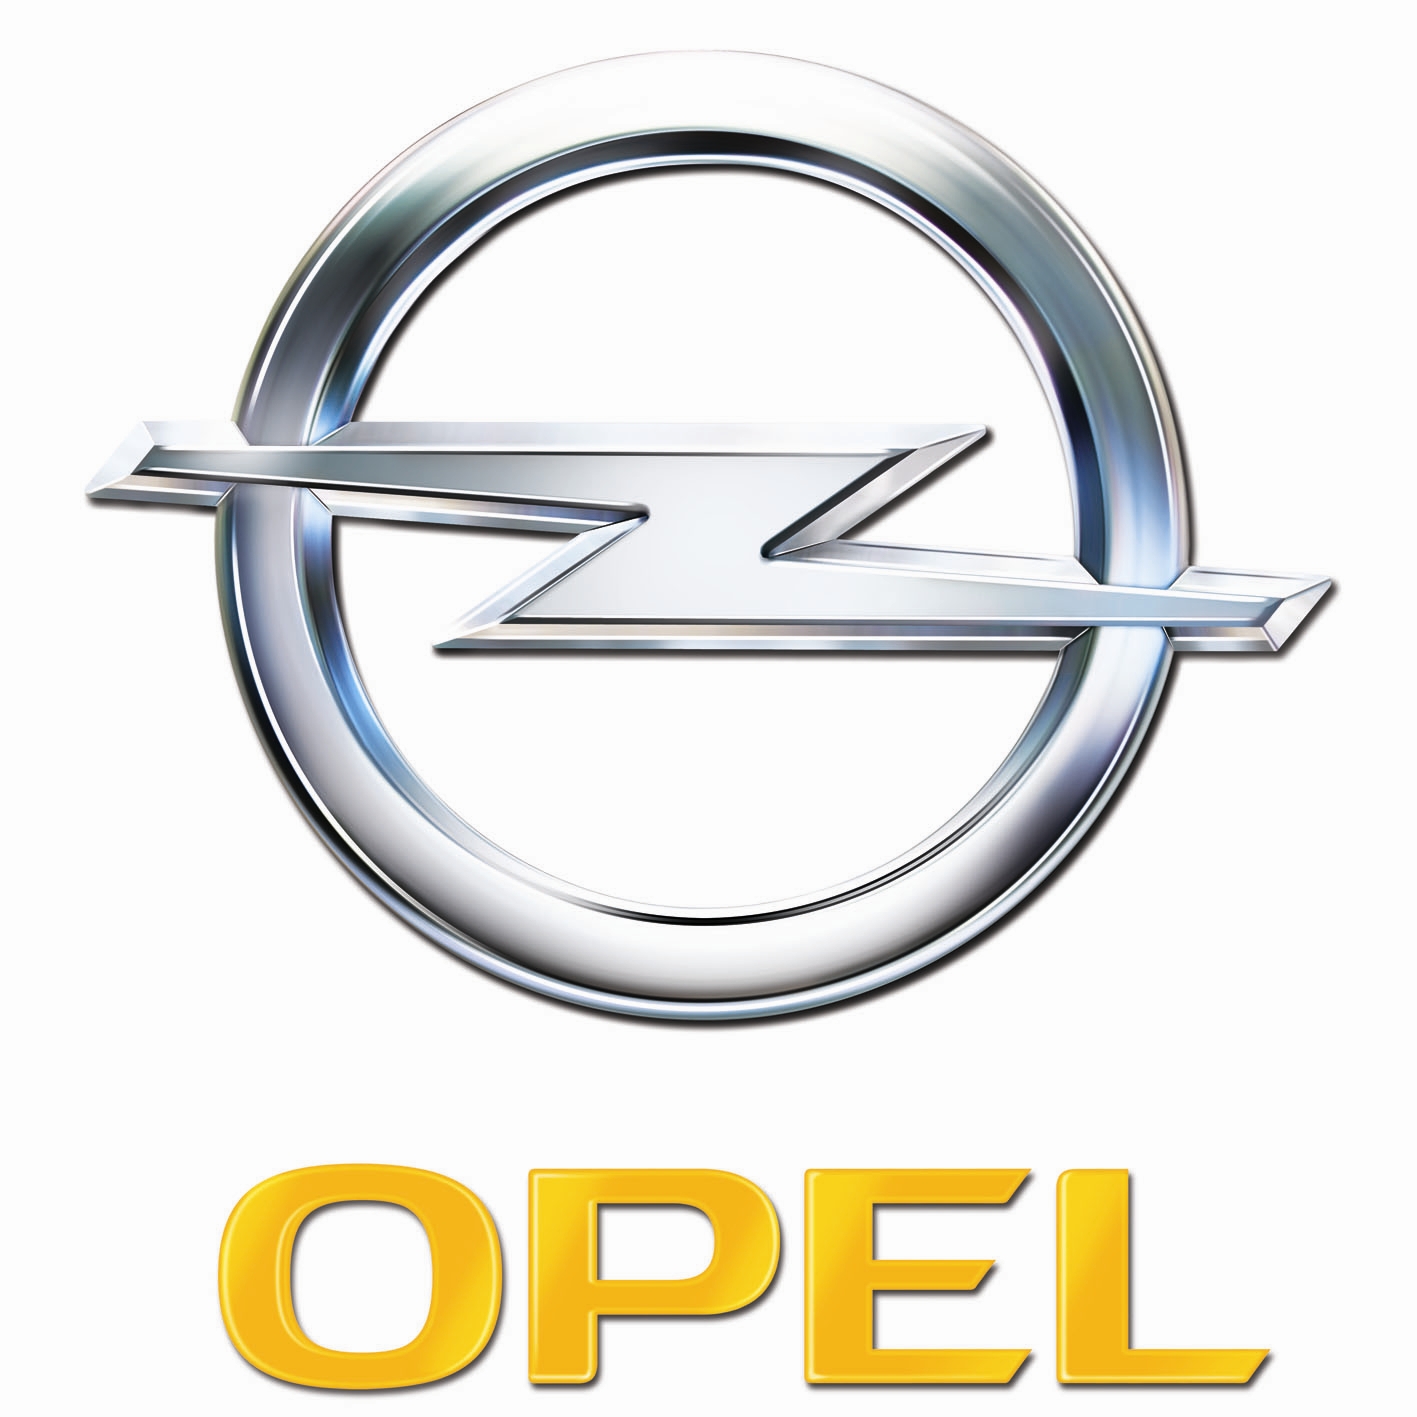 Opel Symbol Wallpaper